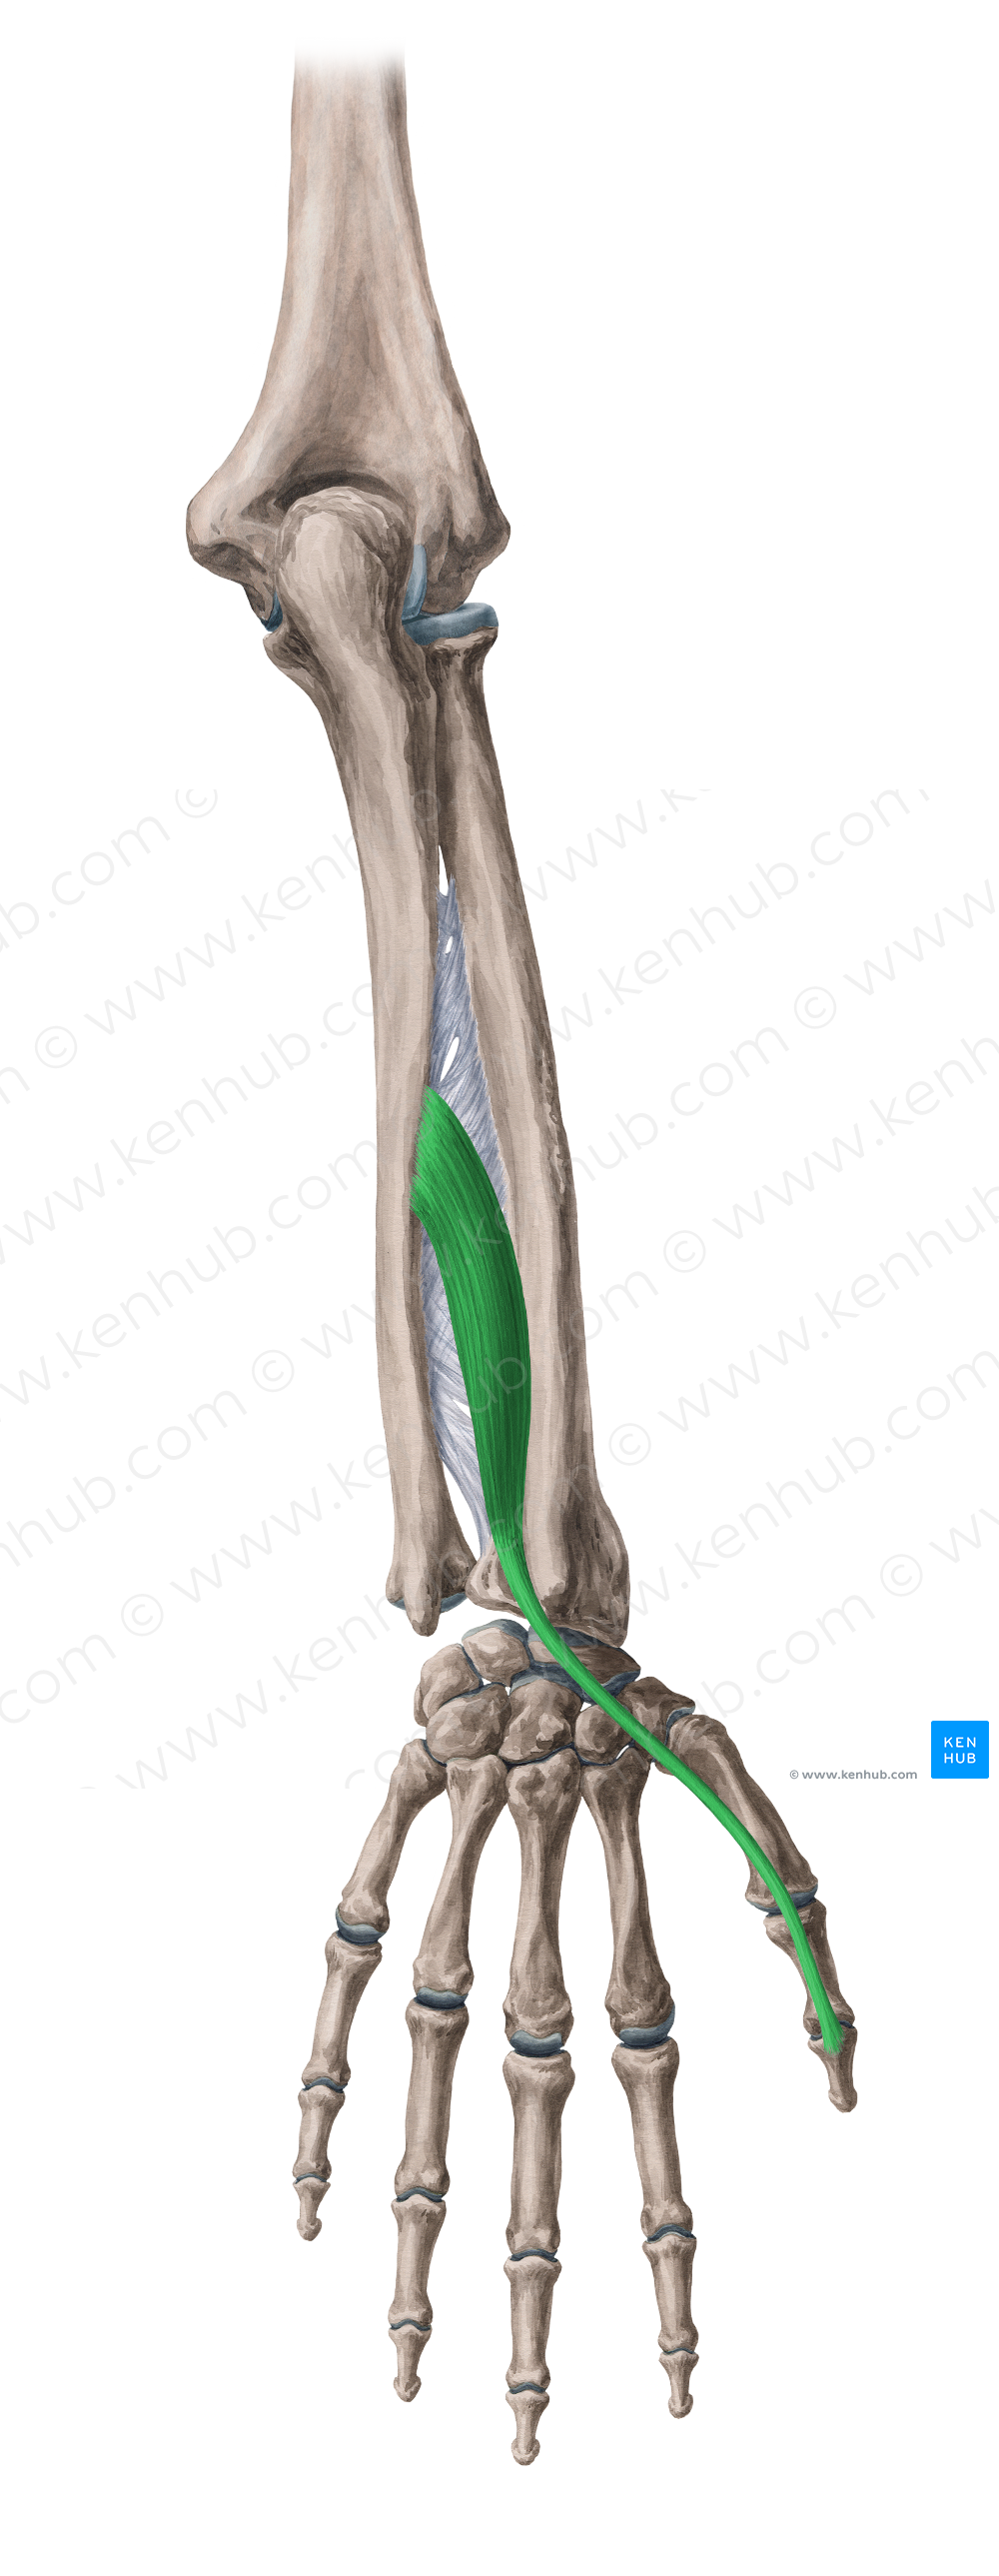 Extensor pollicis longus muscle (#5346)